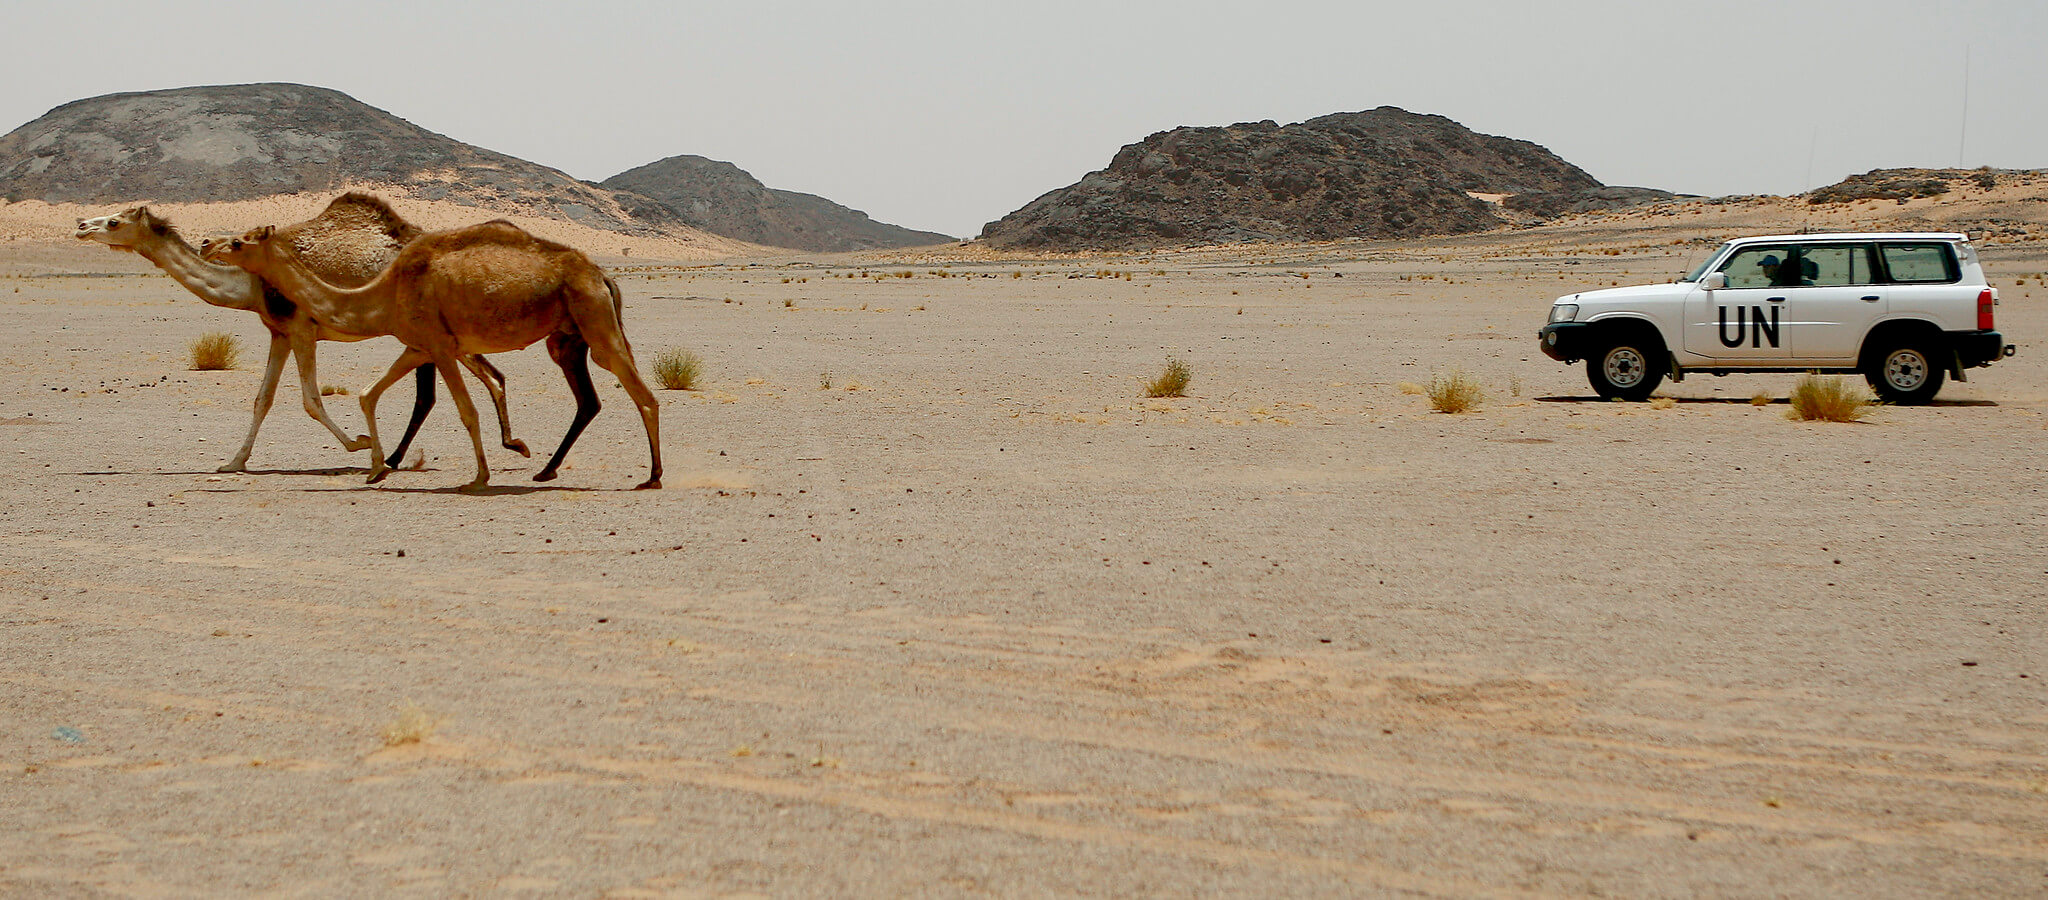 Dorhout - De Westelijke Sahara in 2010. UN Photo